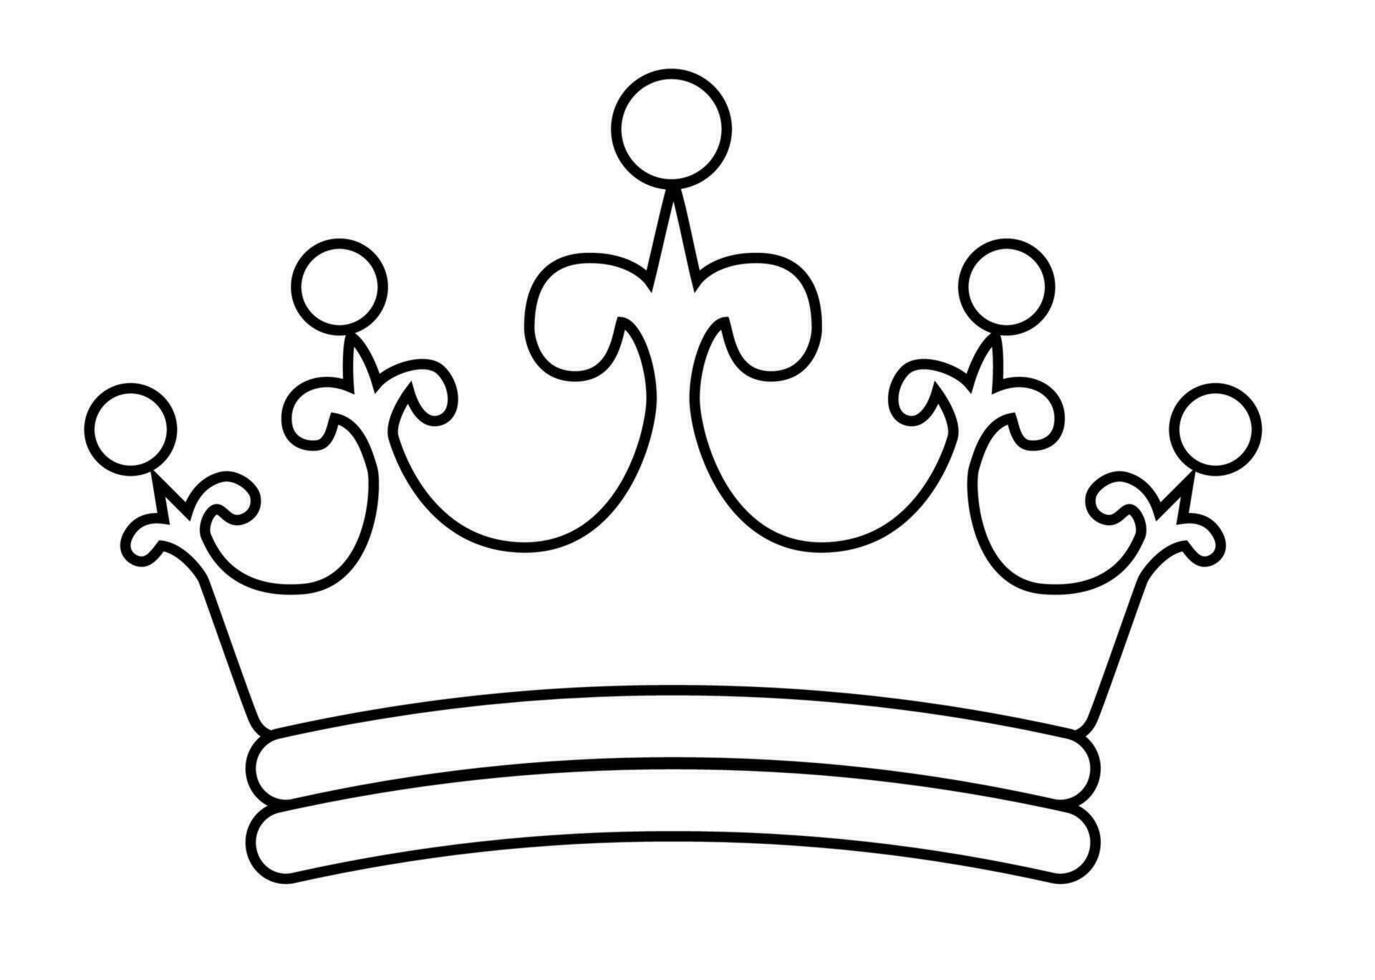 Simple crown icon. Vector Illustration